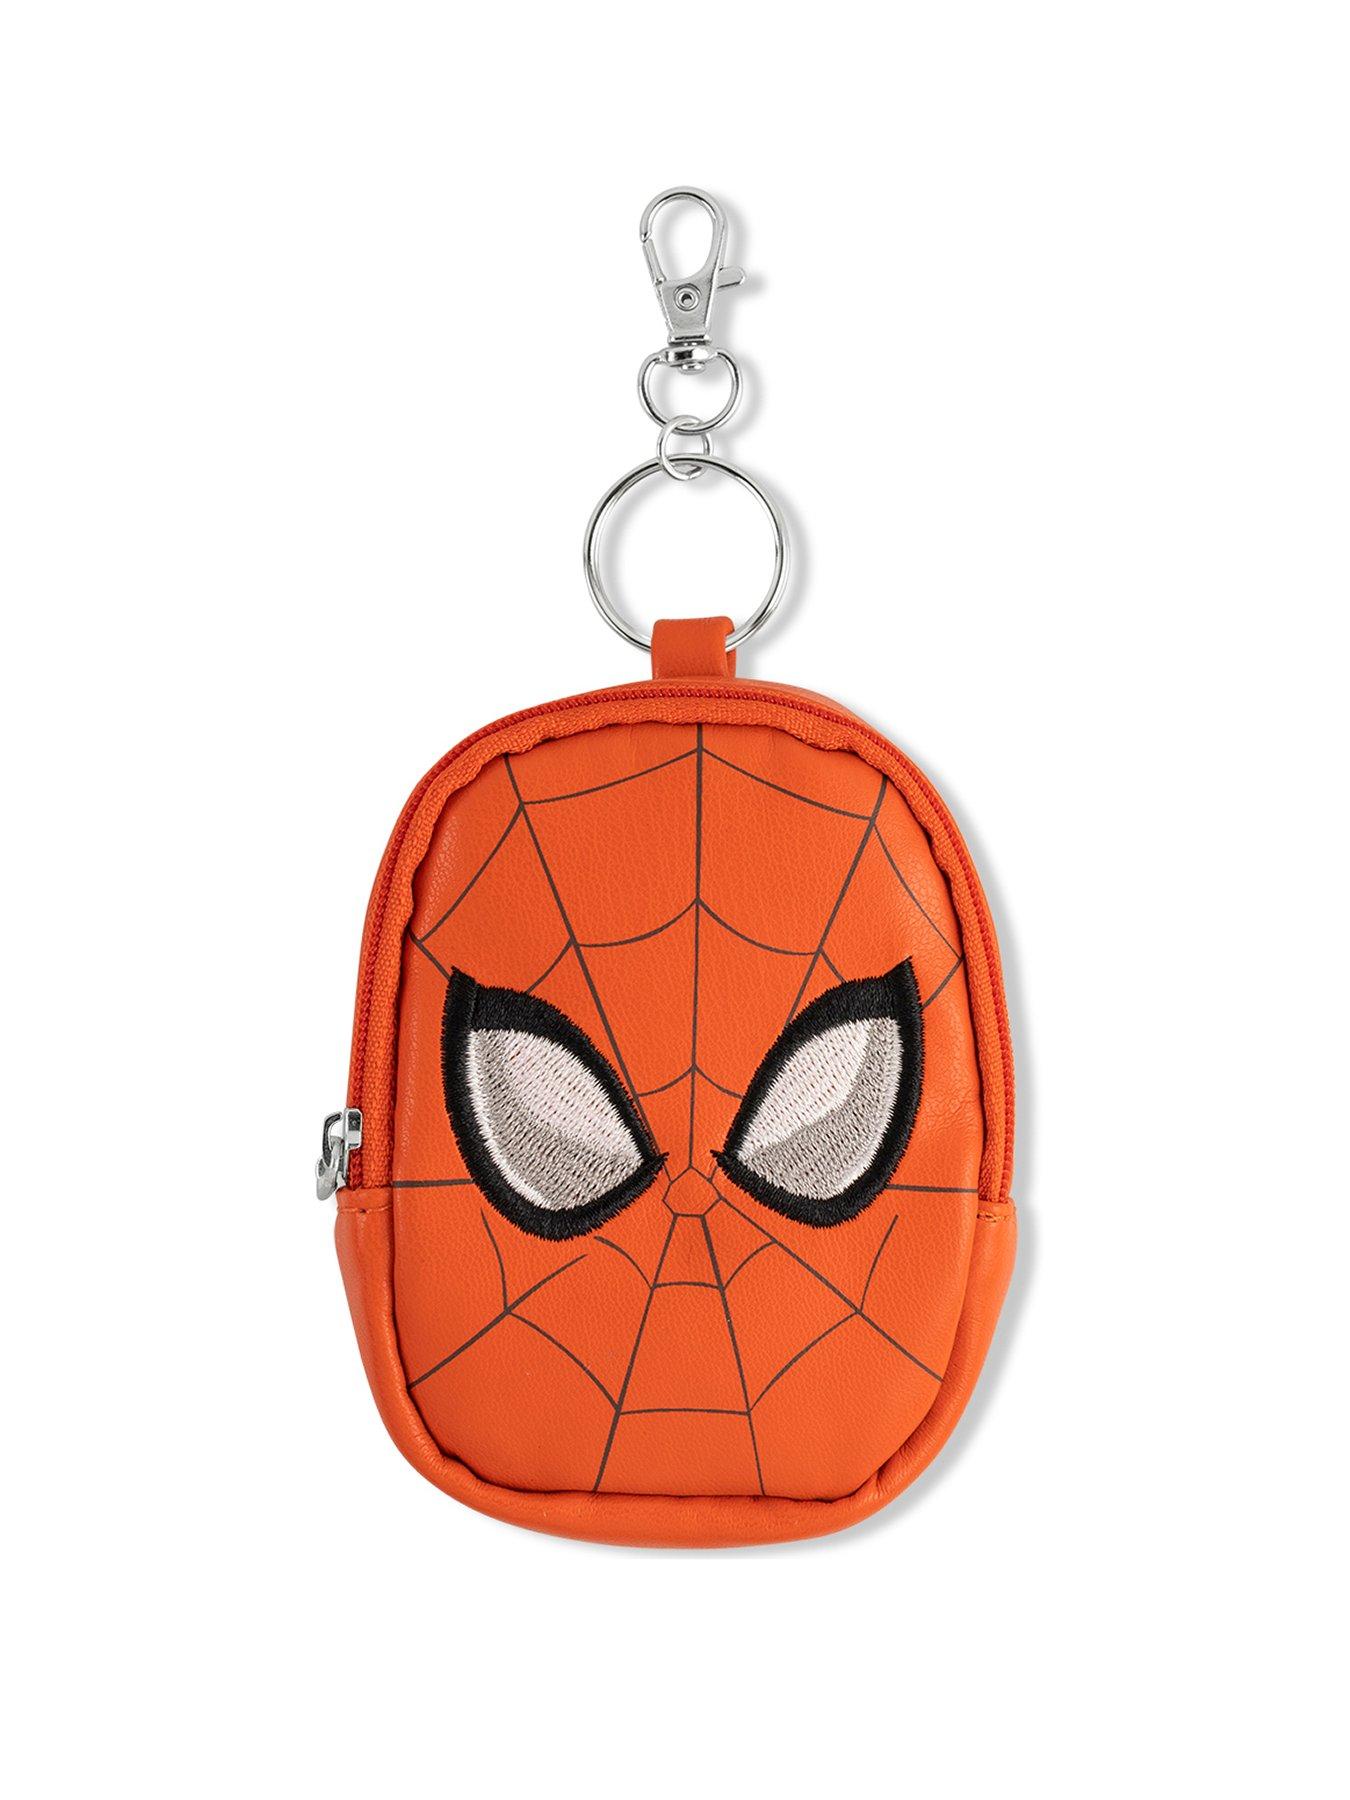 Disney Marvel Spiderman Red Mini Backpack Keychain, Multi